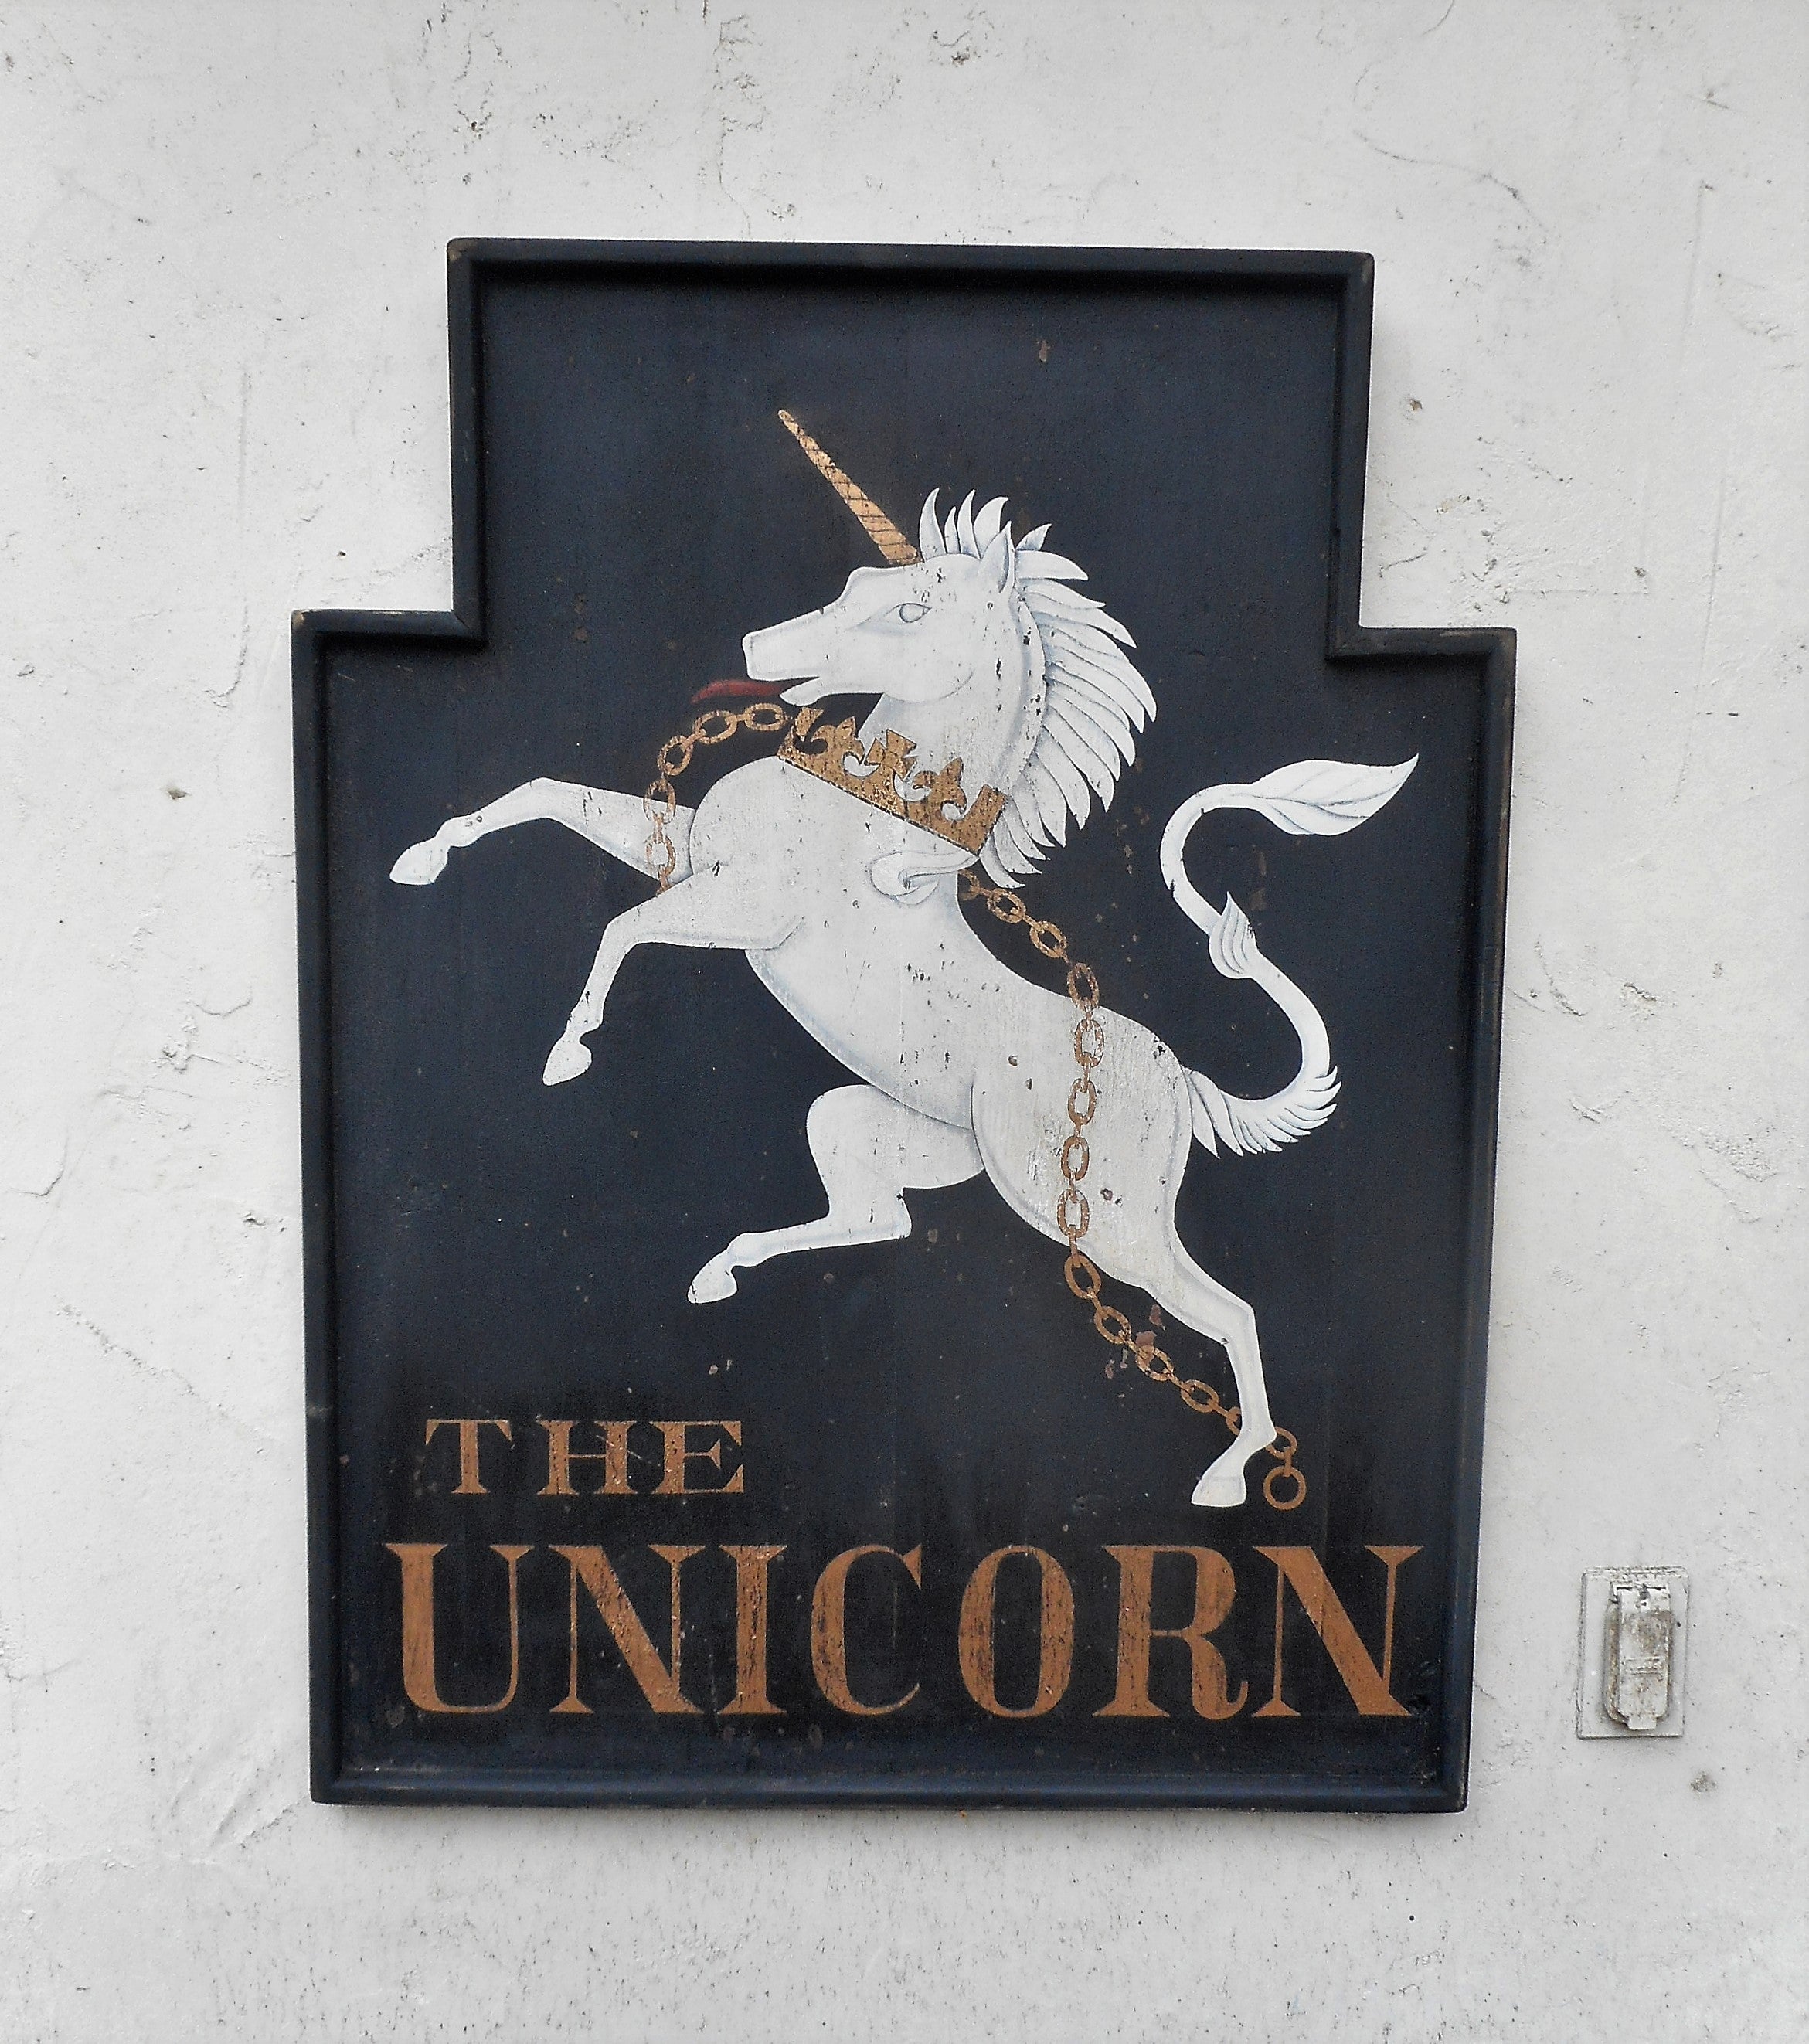 "The Unicorn" Pub sign